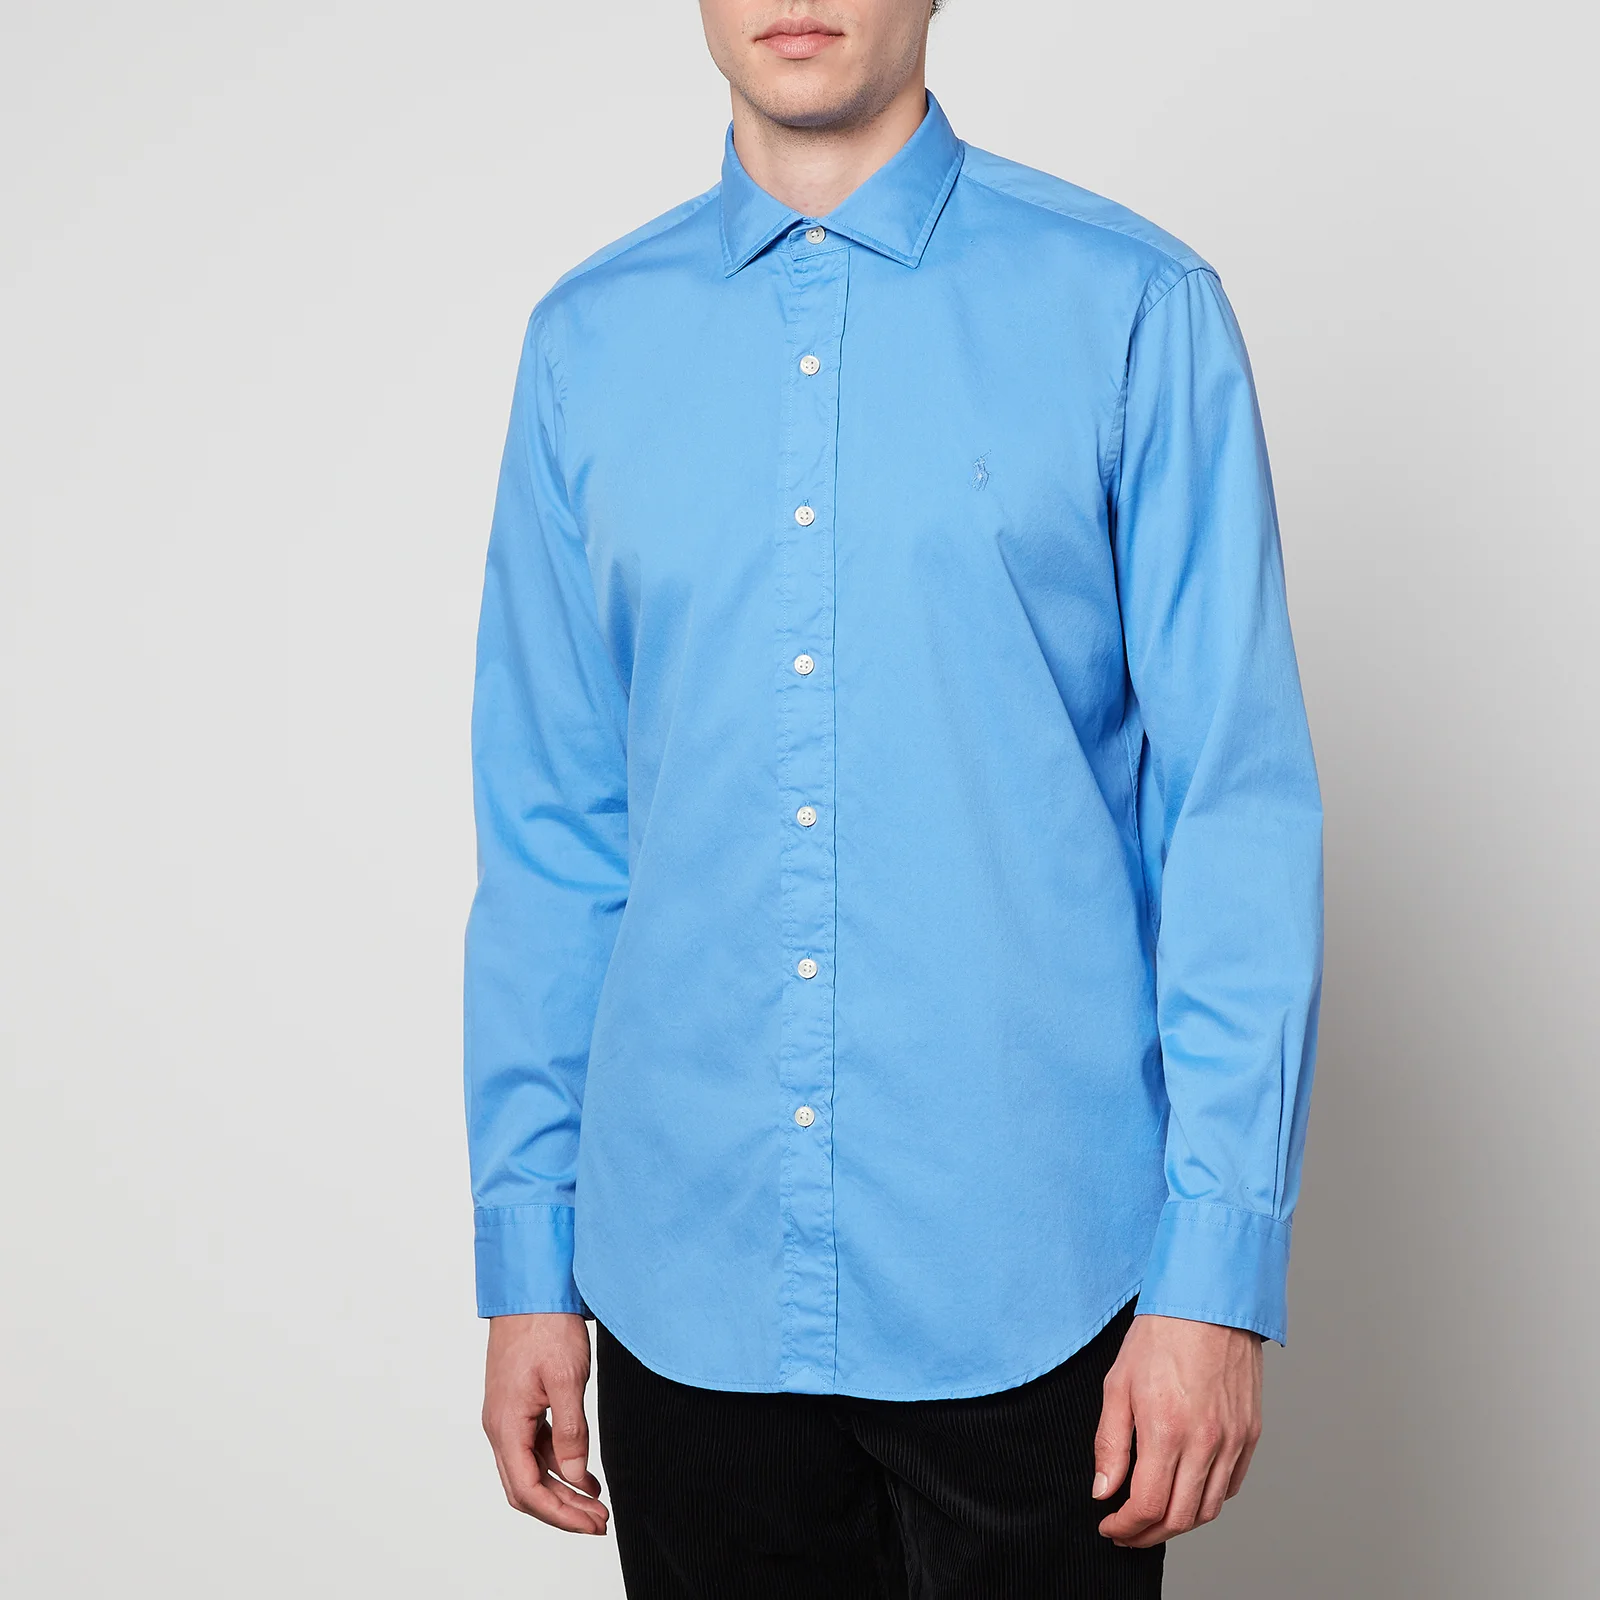 Polo Ralph Lauren Men's Custom Fit Garment Dyed Twill Shirt - Harbor Island Blue Image 1